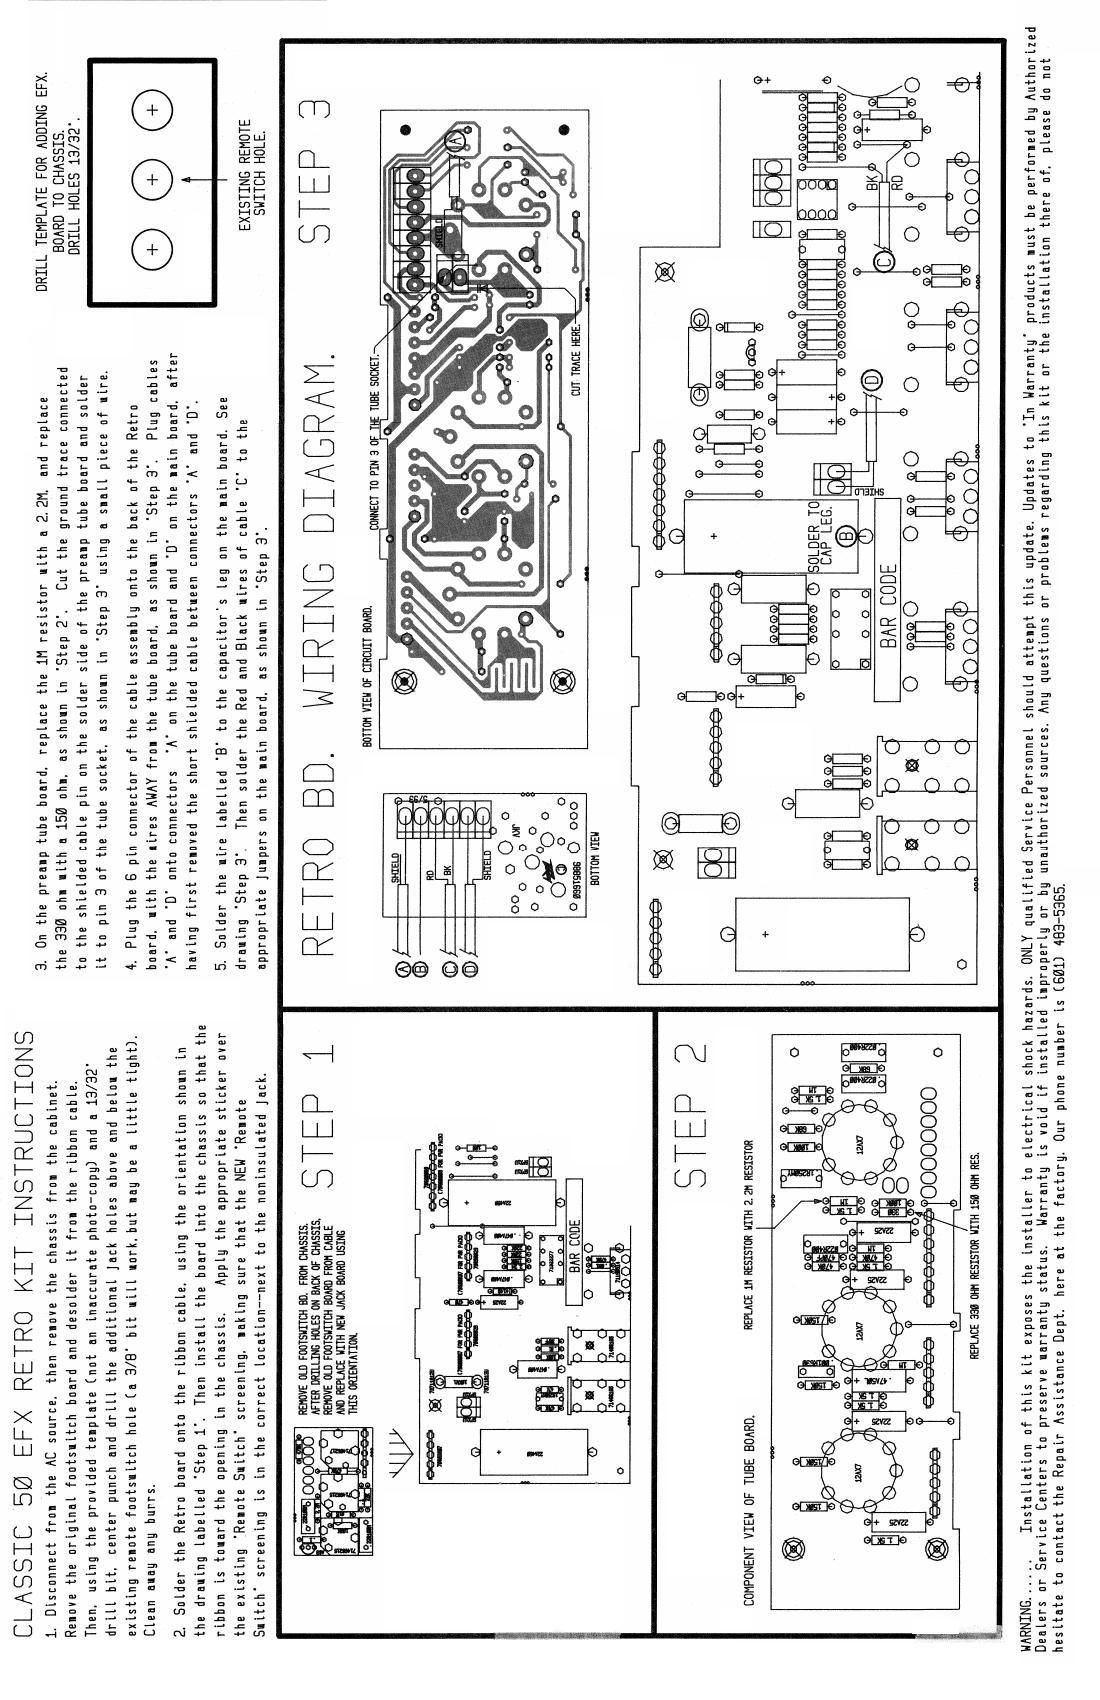 Peavey Classic 50 EFX Retro Board Service Manual